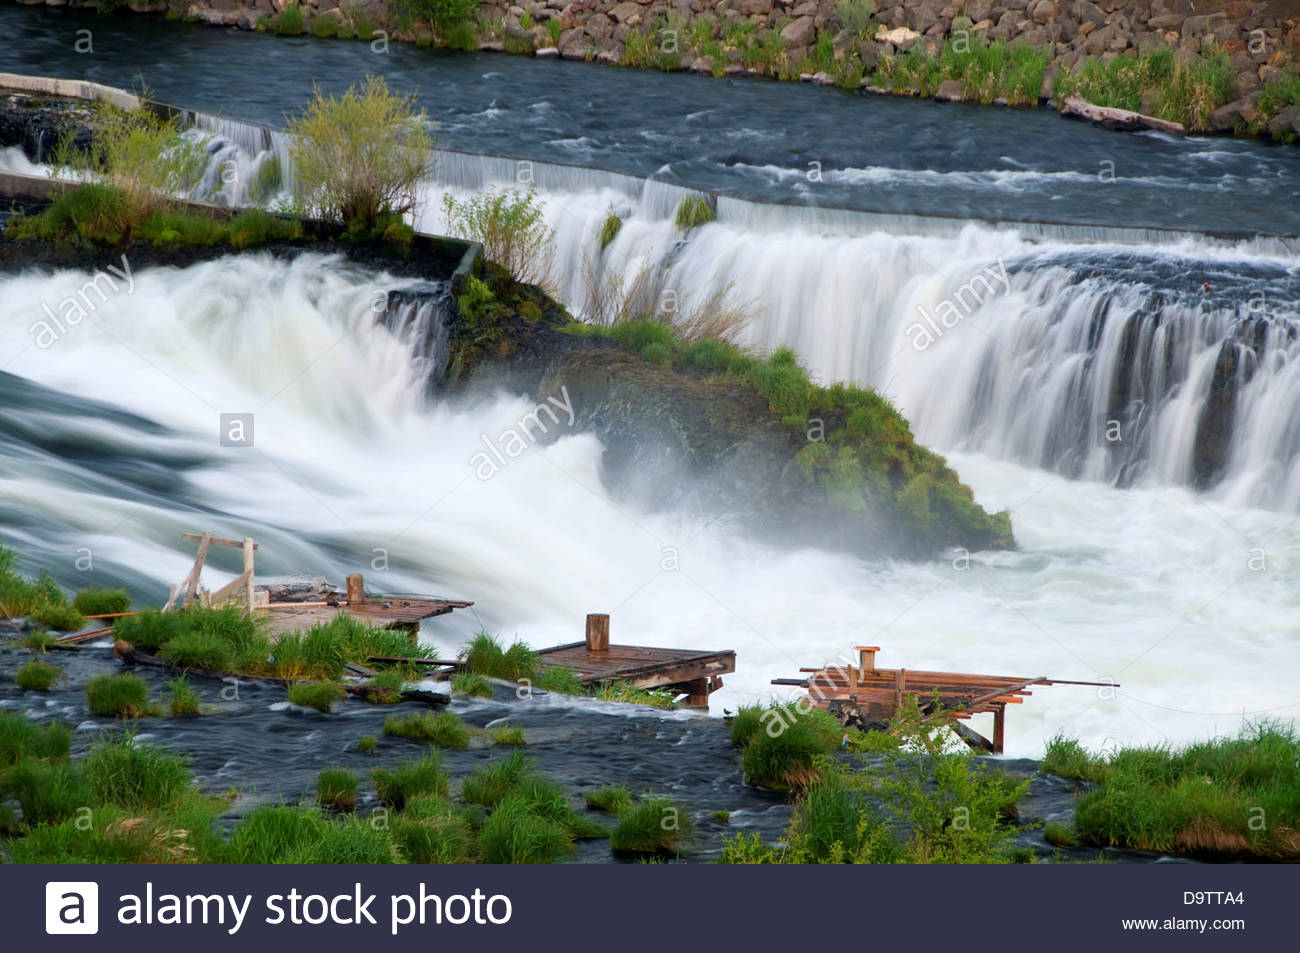 usa-oregon-prineville-district-sherars-falls-deschutes-river-D9TTA4.jpg